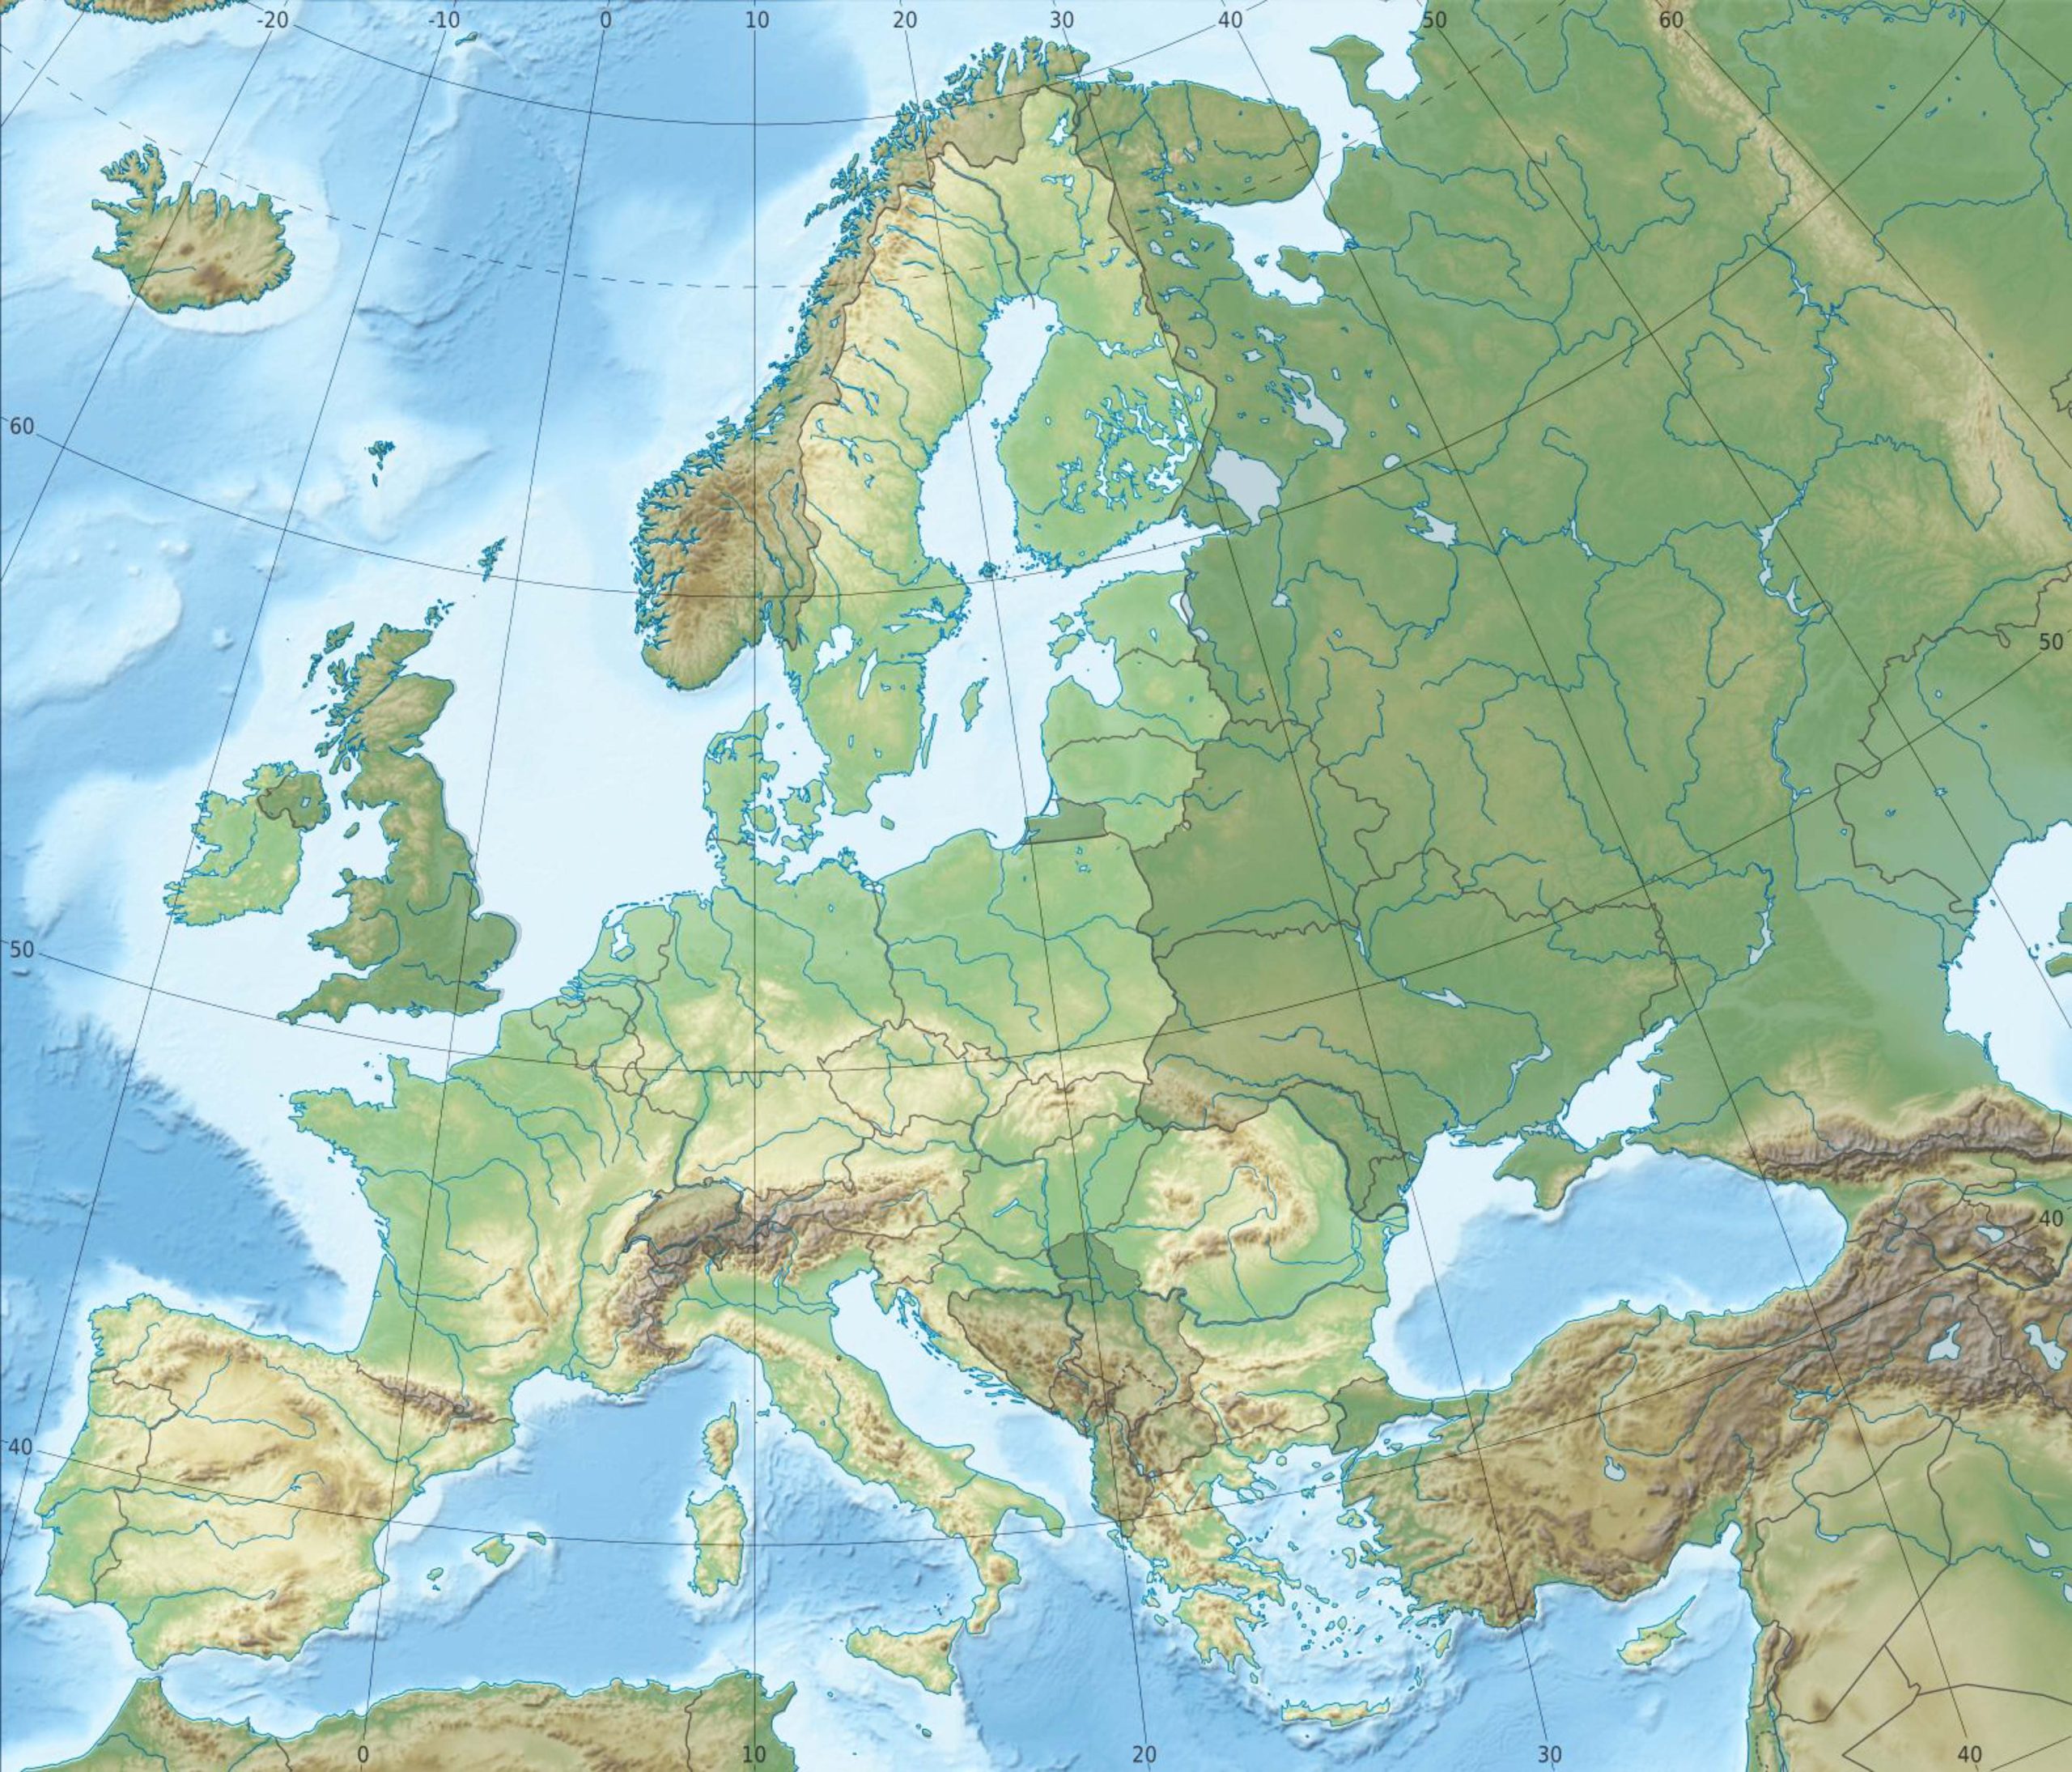 Europe Topographic Map